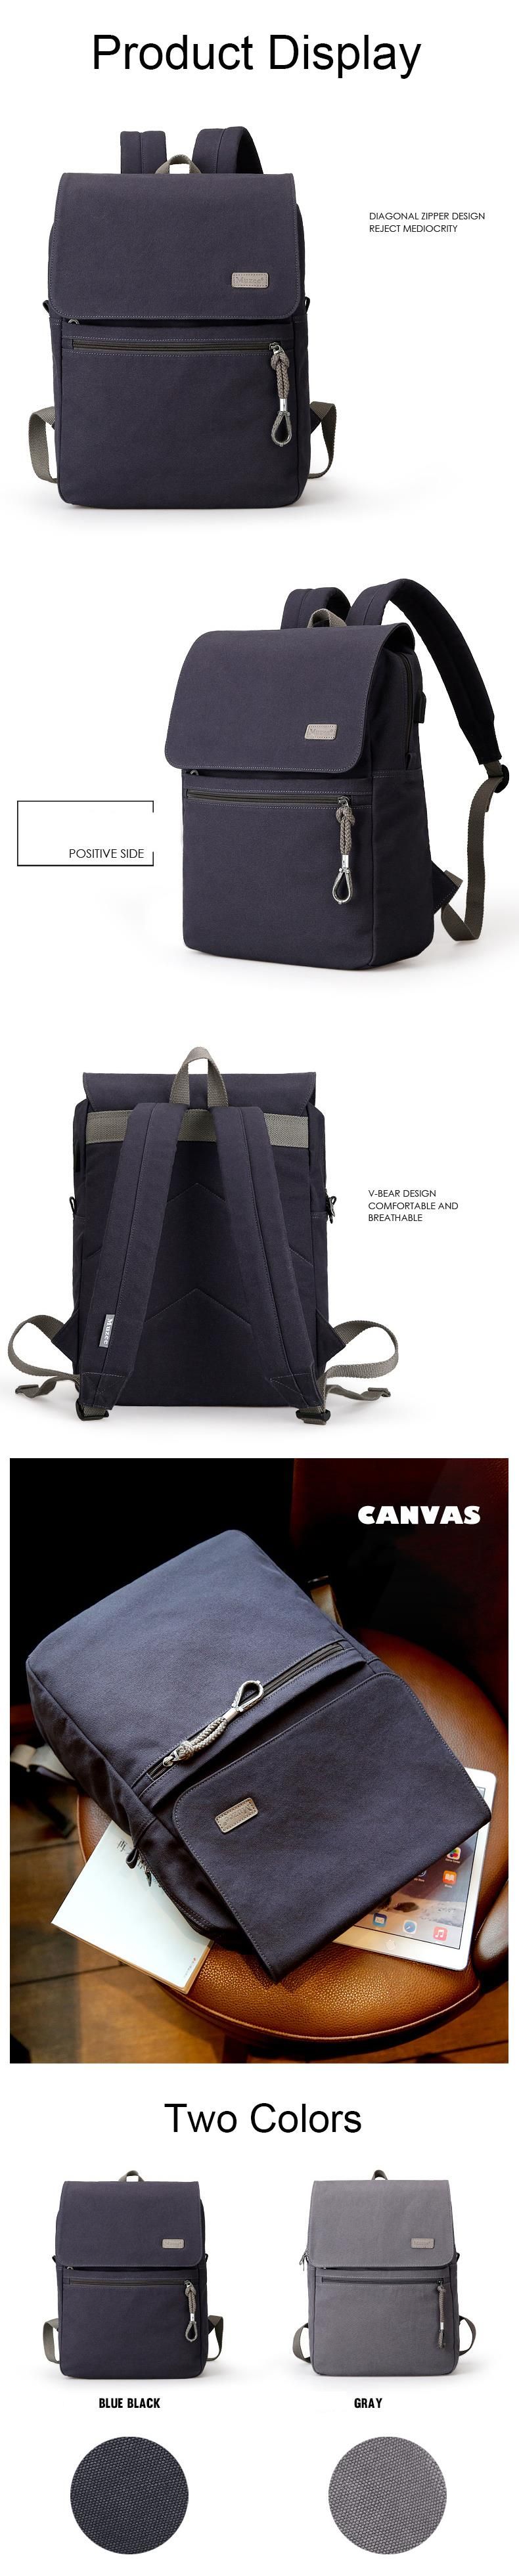 OZUKU-156-inch-Backpack-Large-Capacuty-USB-Charging-Waterproof-Business-Travel-Laptop-Bag-1649199